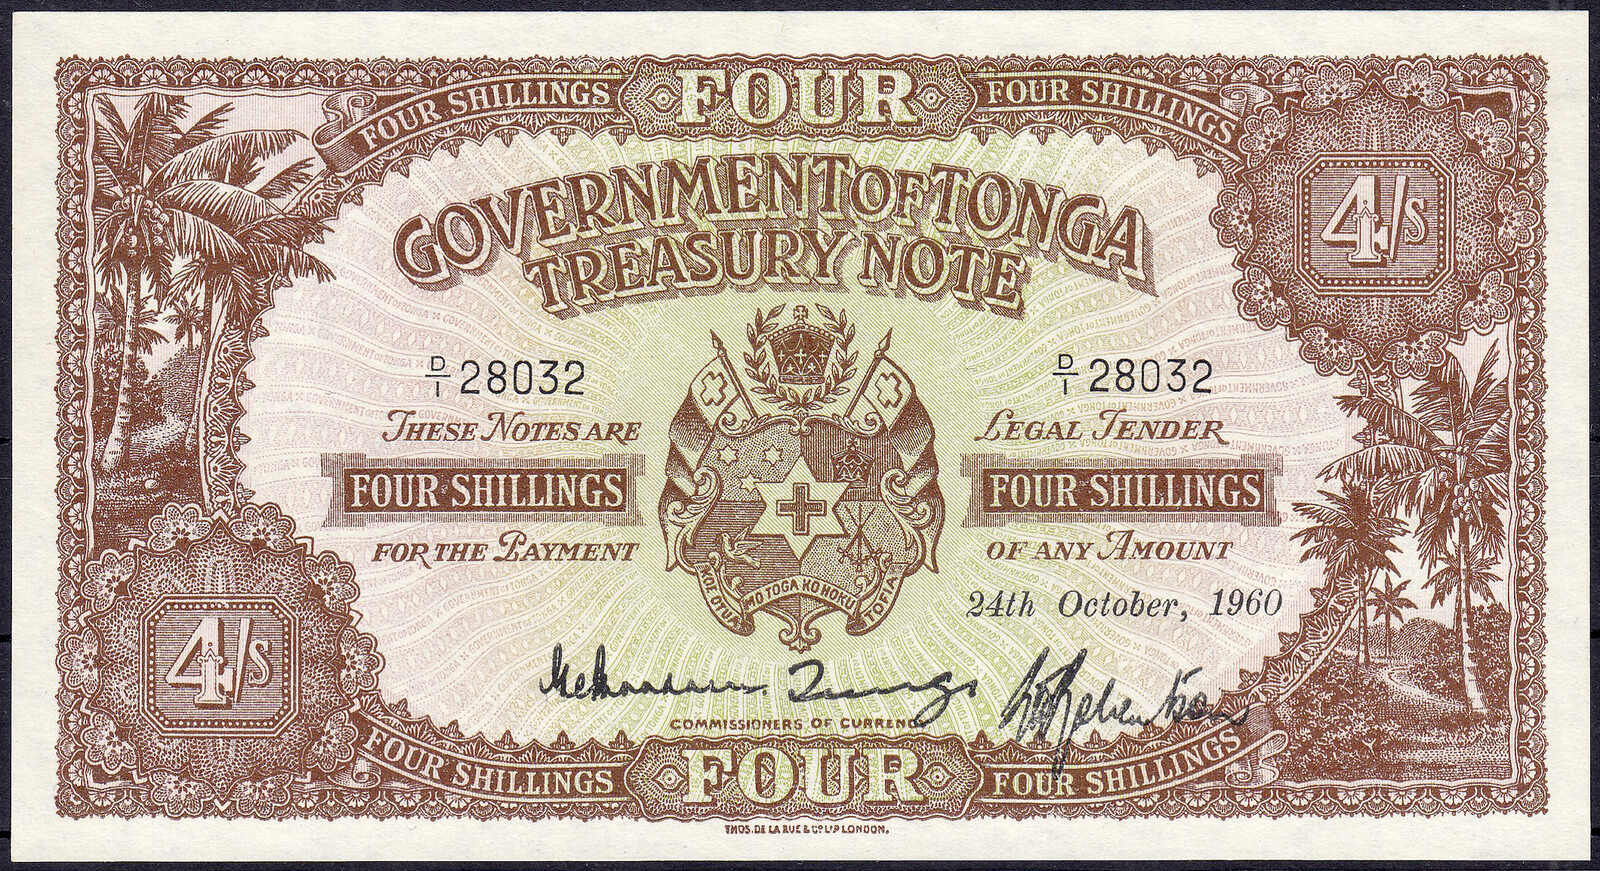 110.580.150: Banknoten - Ozeanien - Tonga